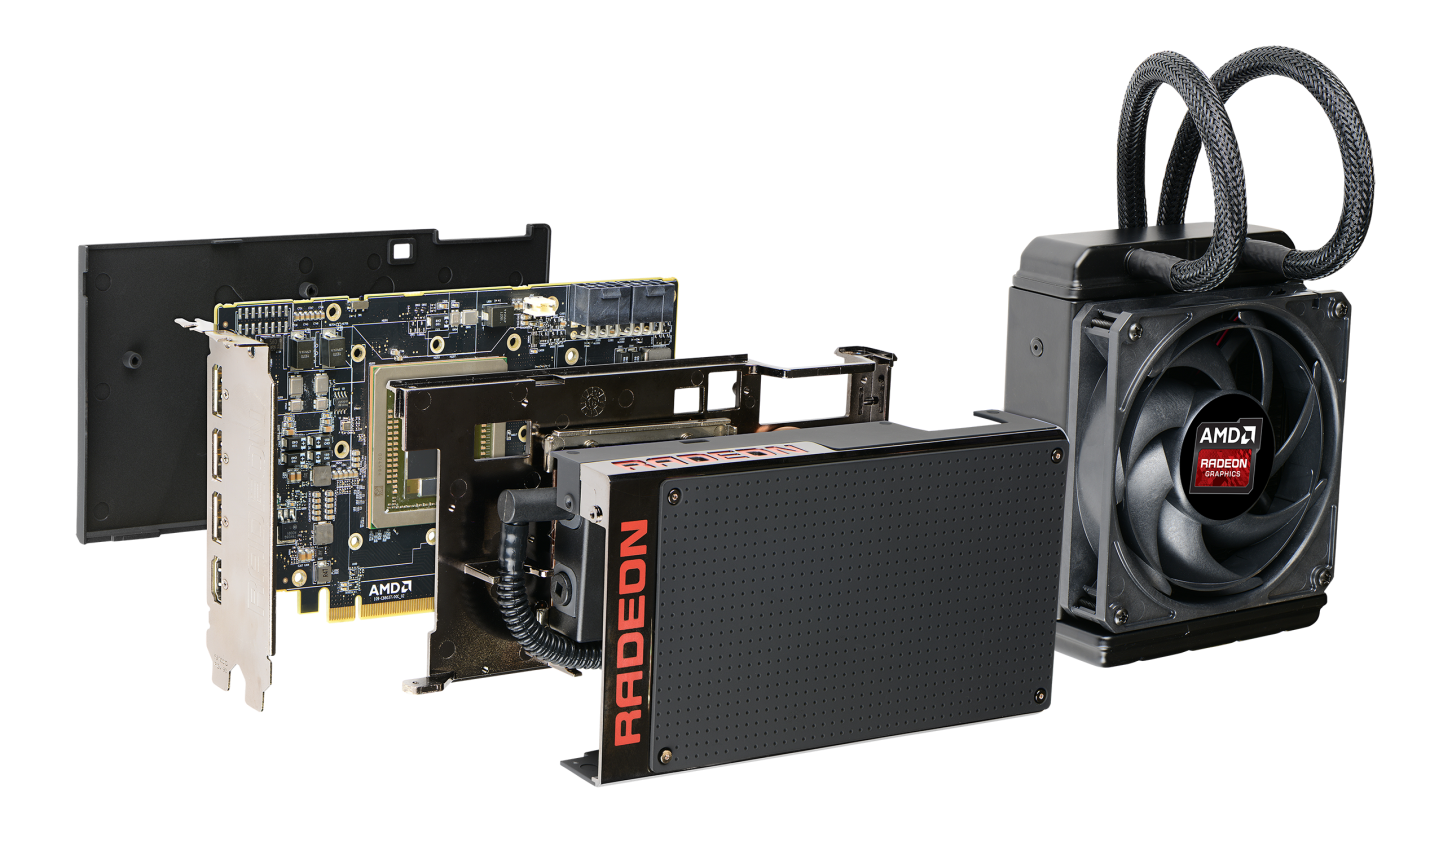 Media asset in full size related to 3dfxzone.it news item entitled as follows: AMD spiega come personalizzare il cooler della Radeon R9 Fury X | Image Name: news22790_AMD-Radeon-R9-Fury-X_1.png